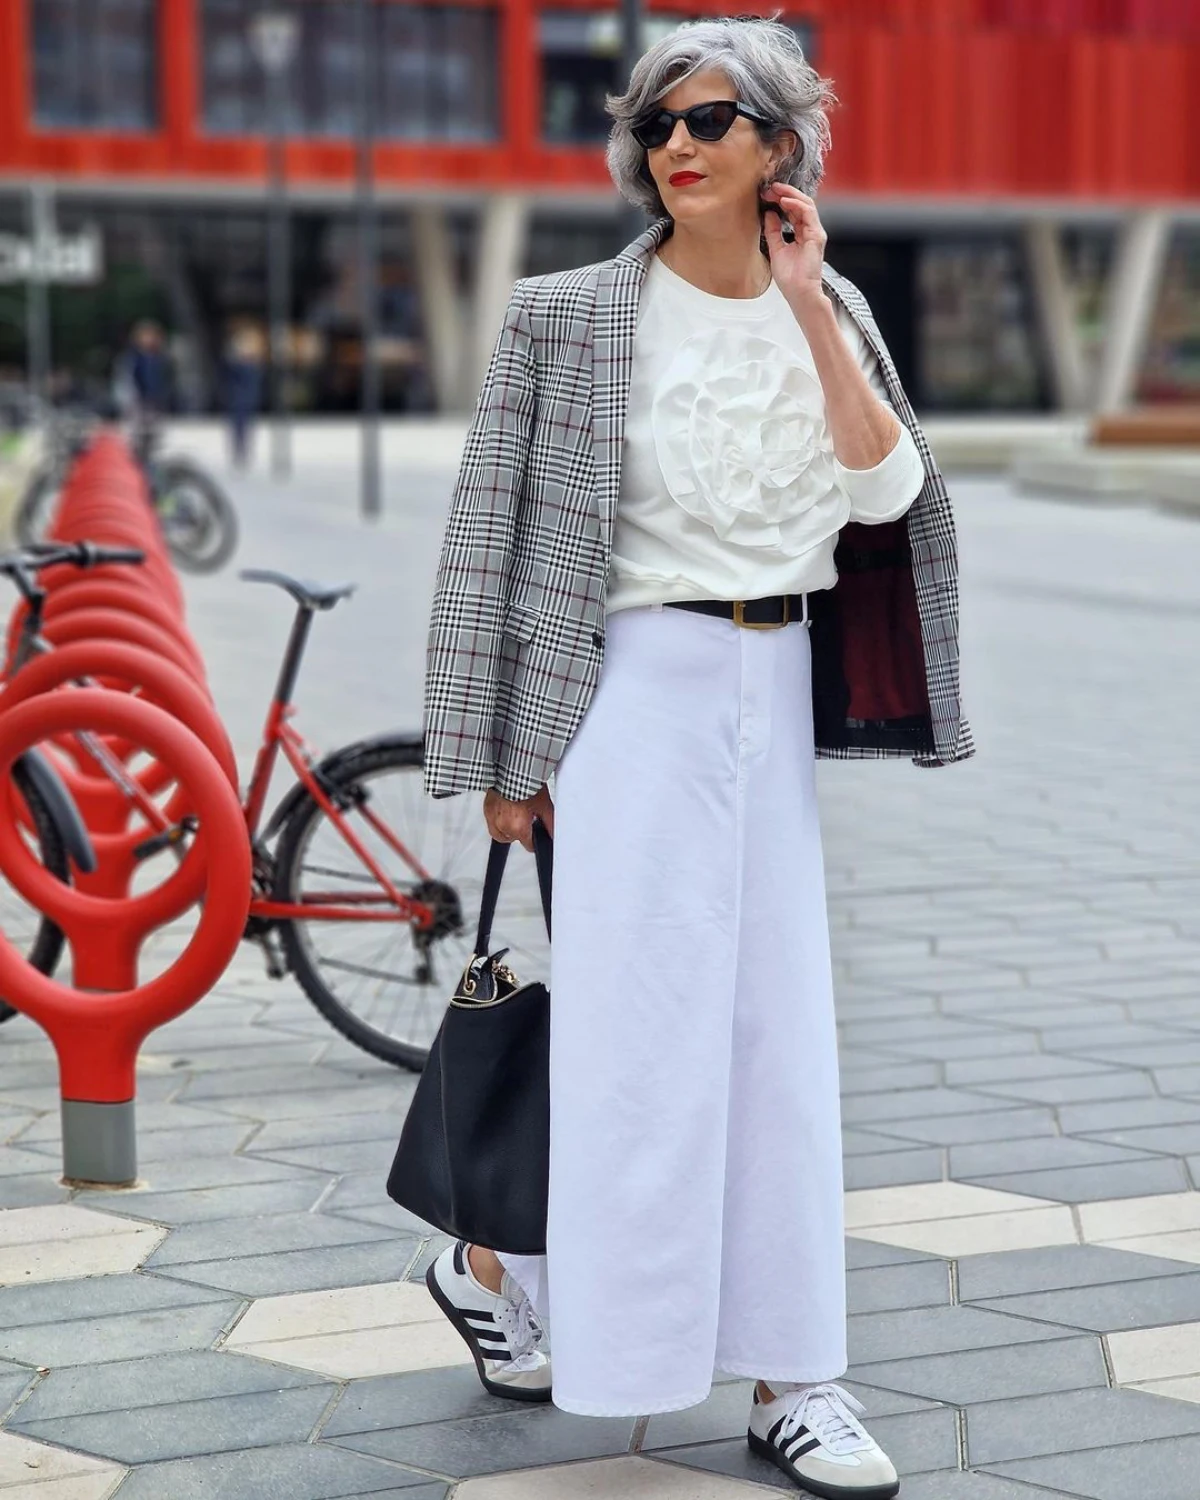 addidas mode femme 60 ans jupe longue veste